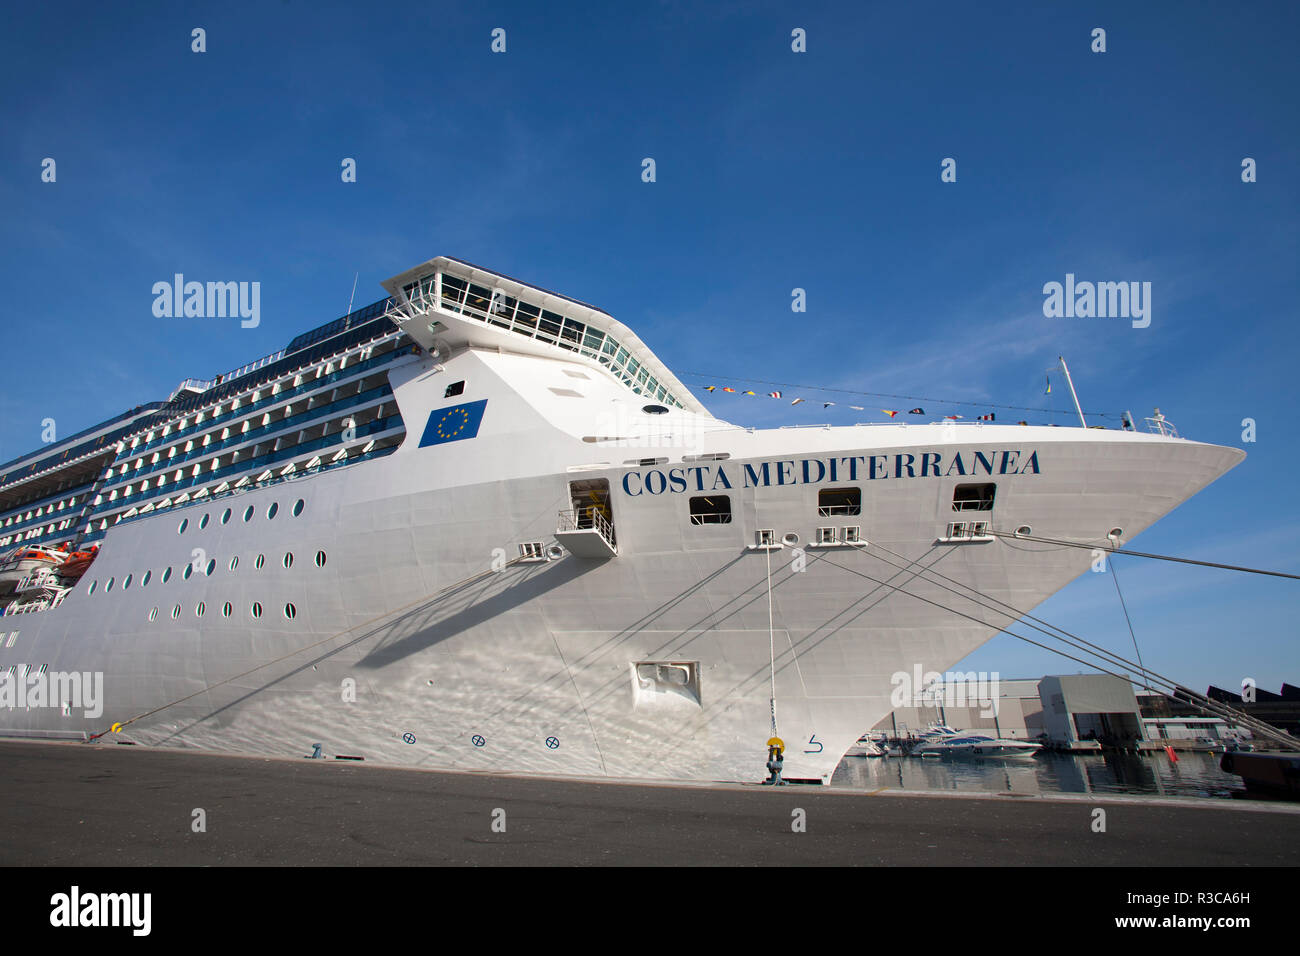 cruise ship, costa mediterranea, costa crociere cruise line, port of savona, liguria, italy, europe Stock Photo